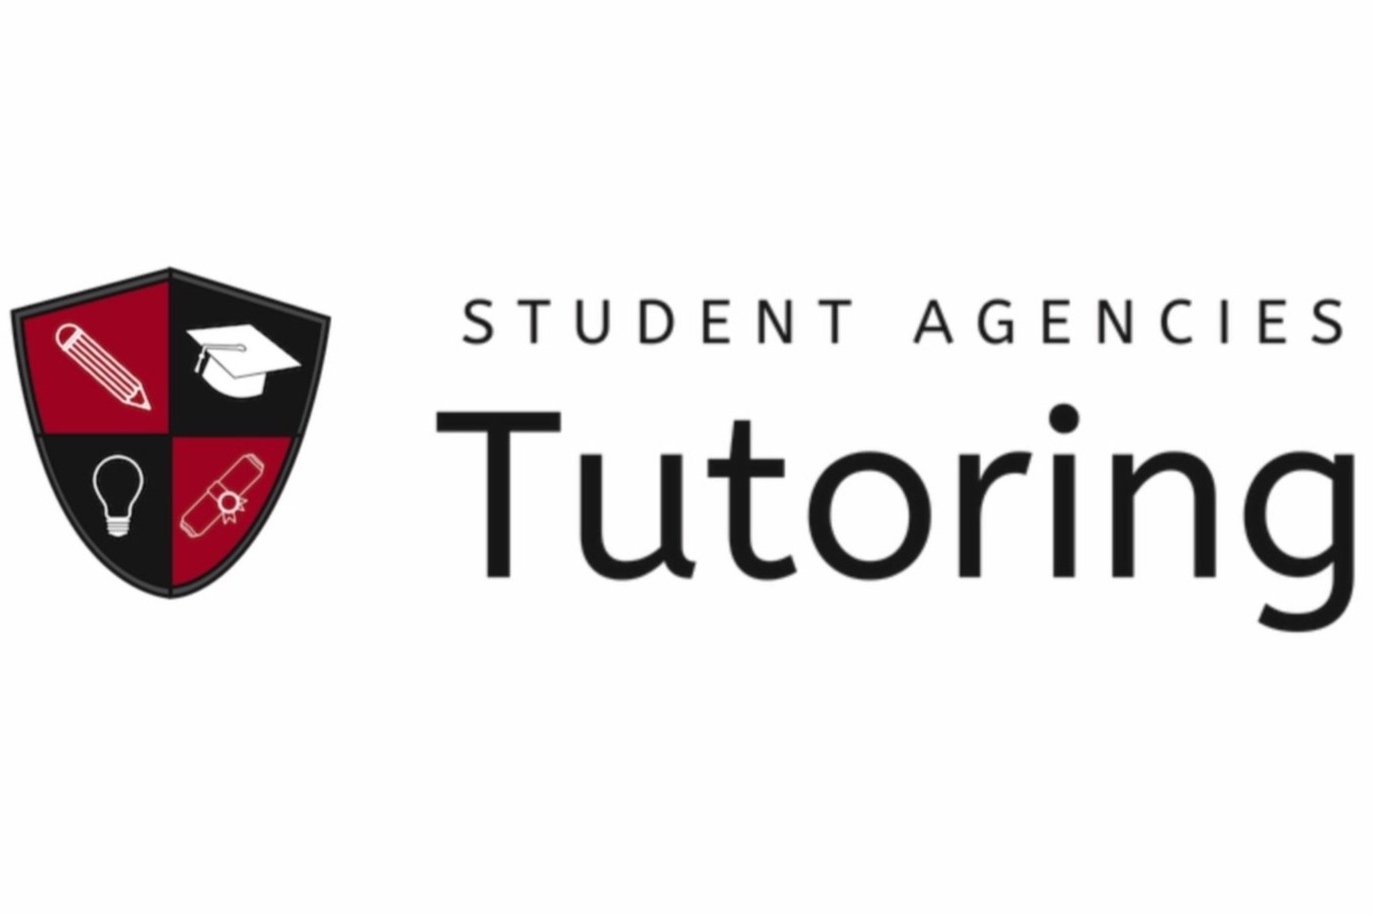 Student Agencies Tutoring